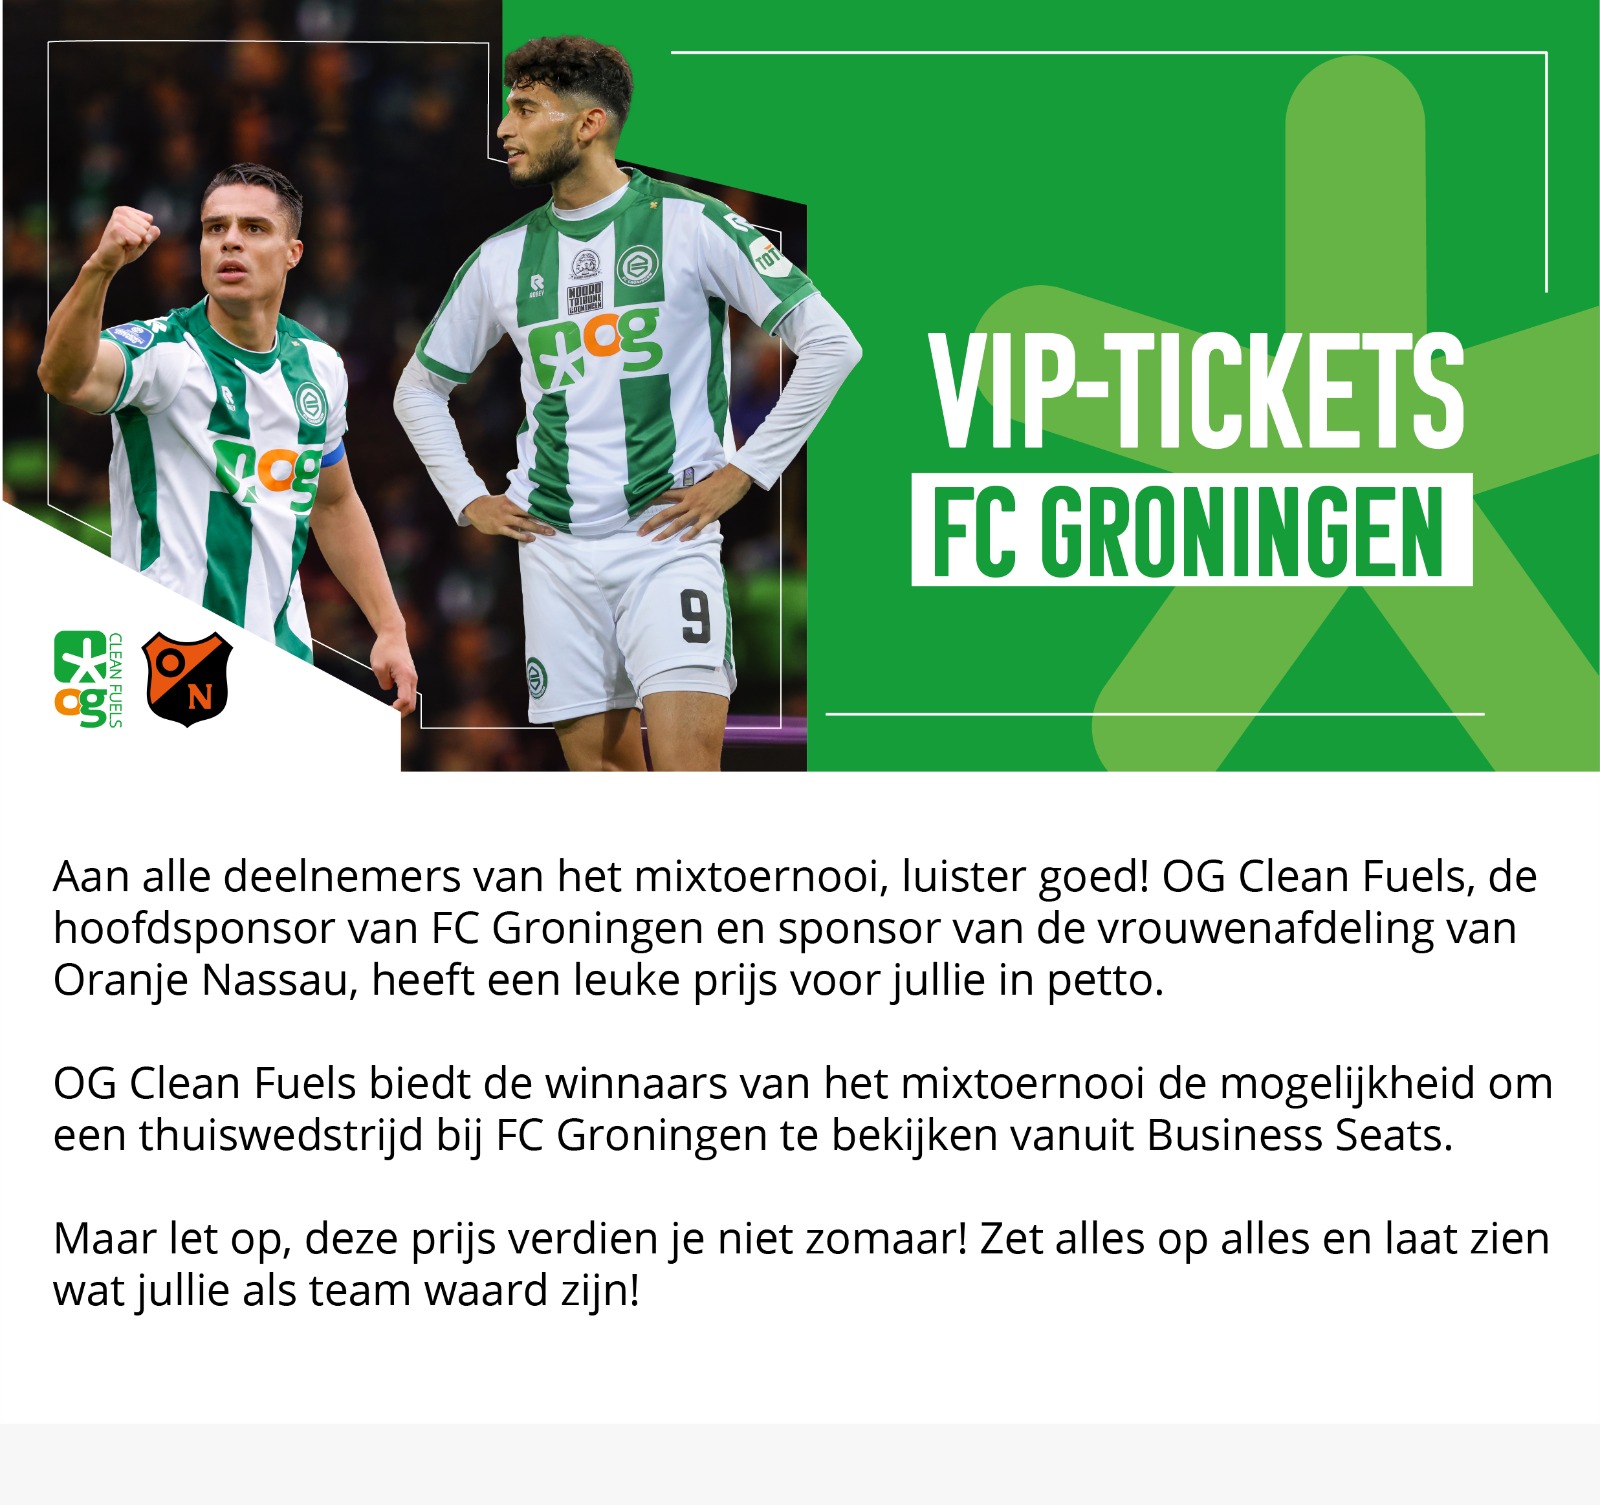 VIP tickets FC Groningen